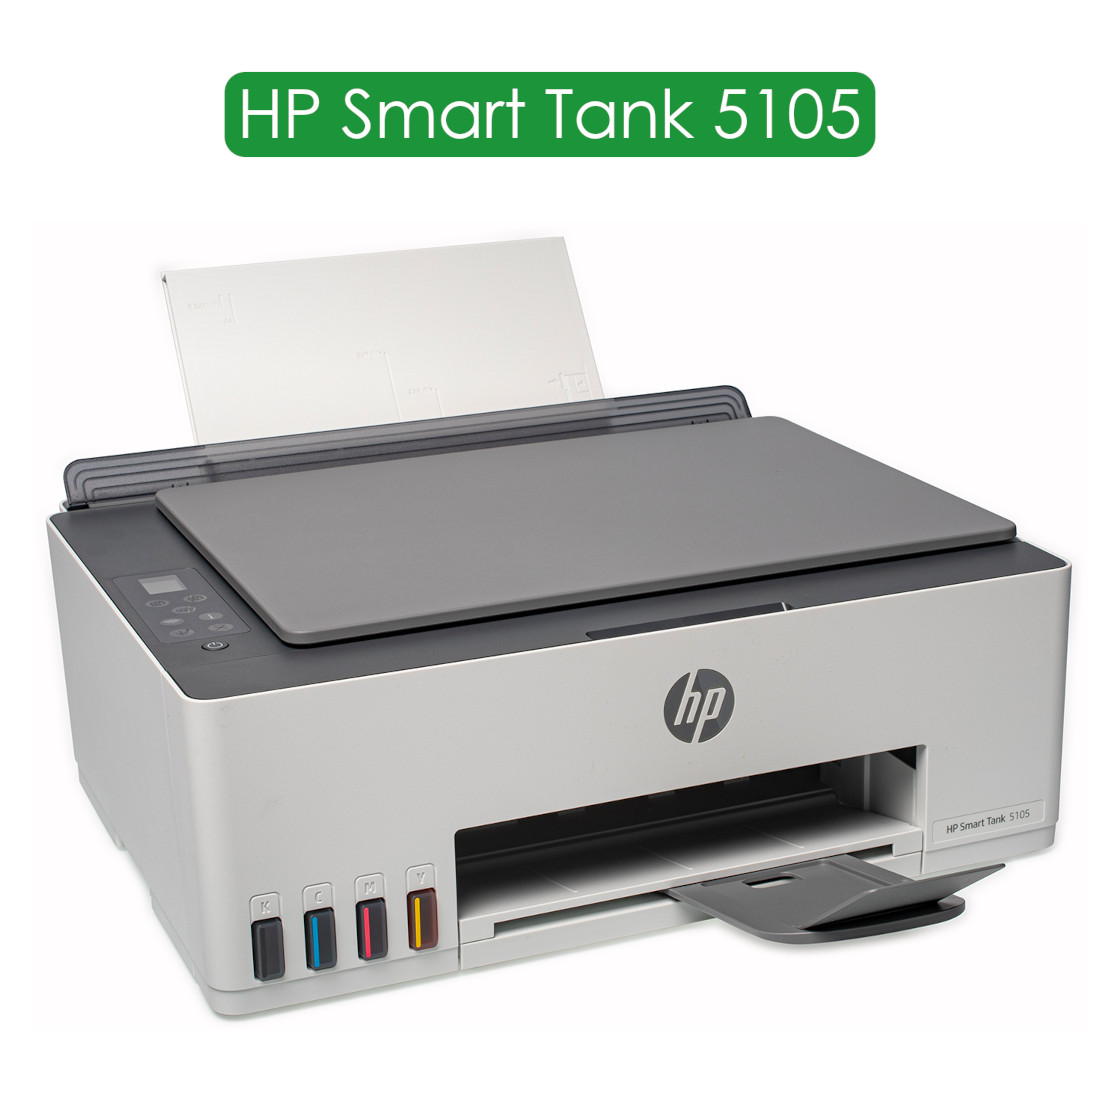 HP Smart Tank 5105